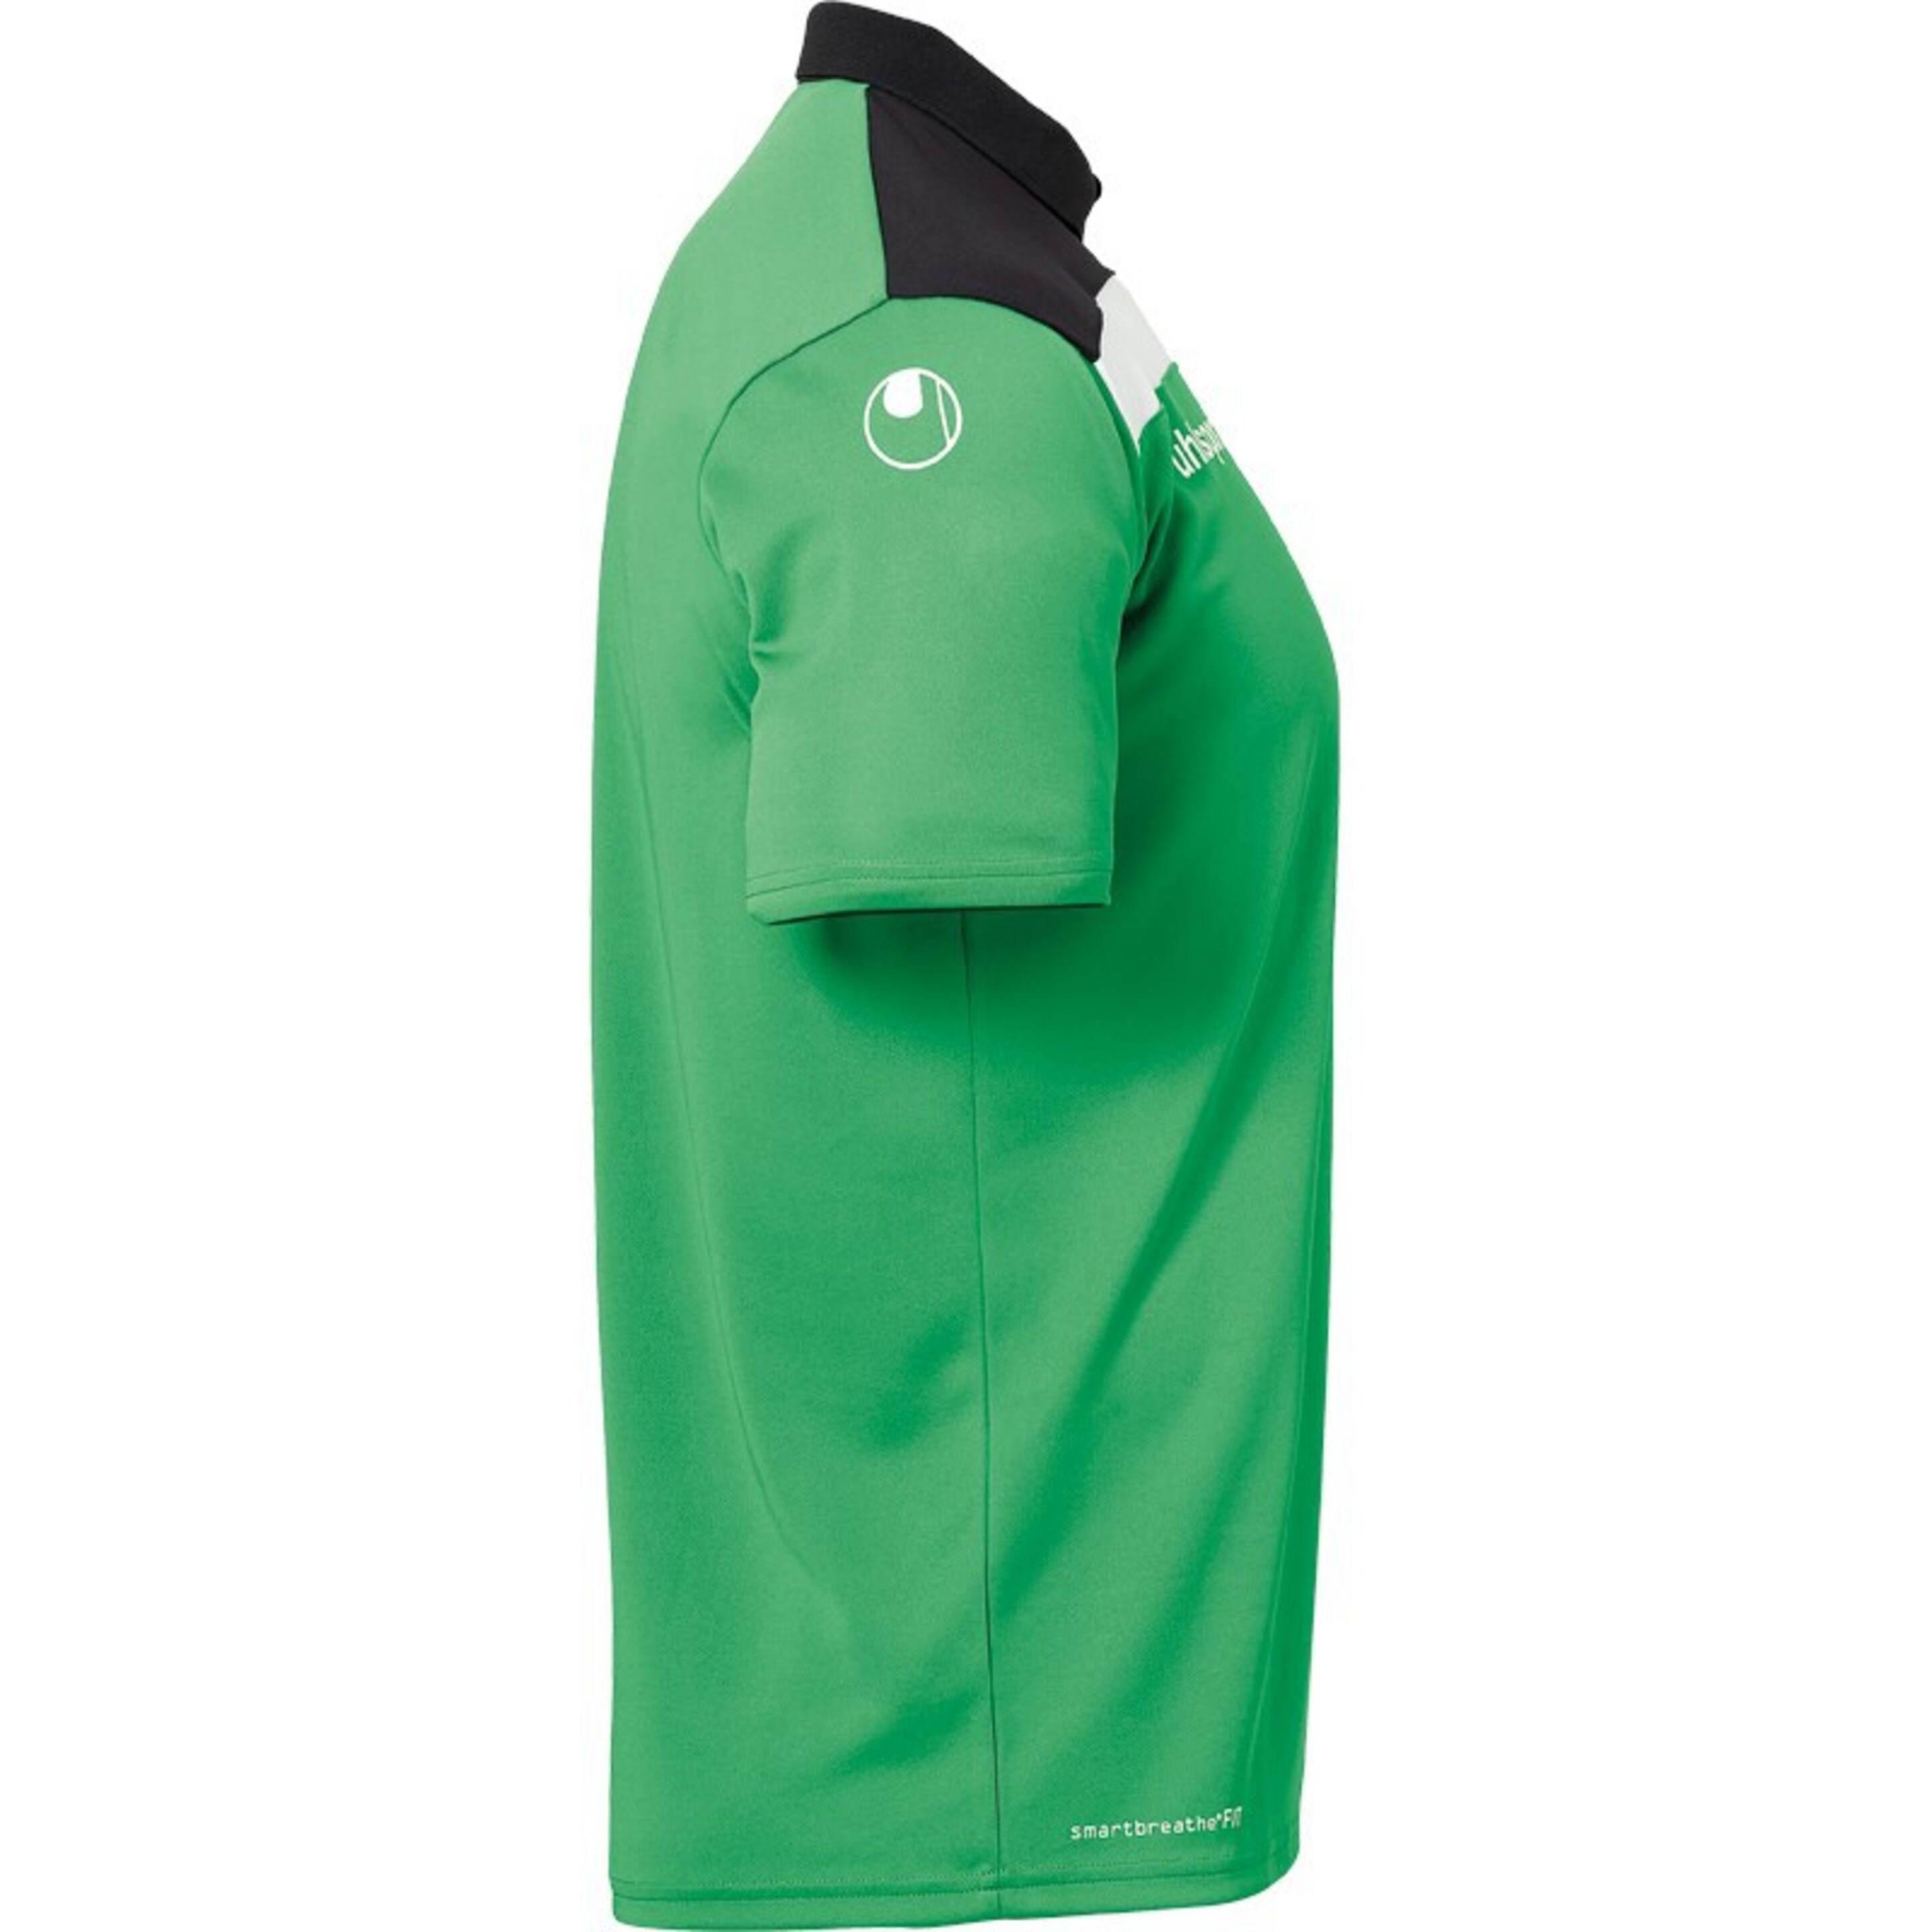 Offense 23 Polo Shirt Verde/negro/blanco Uhlsport